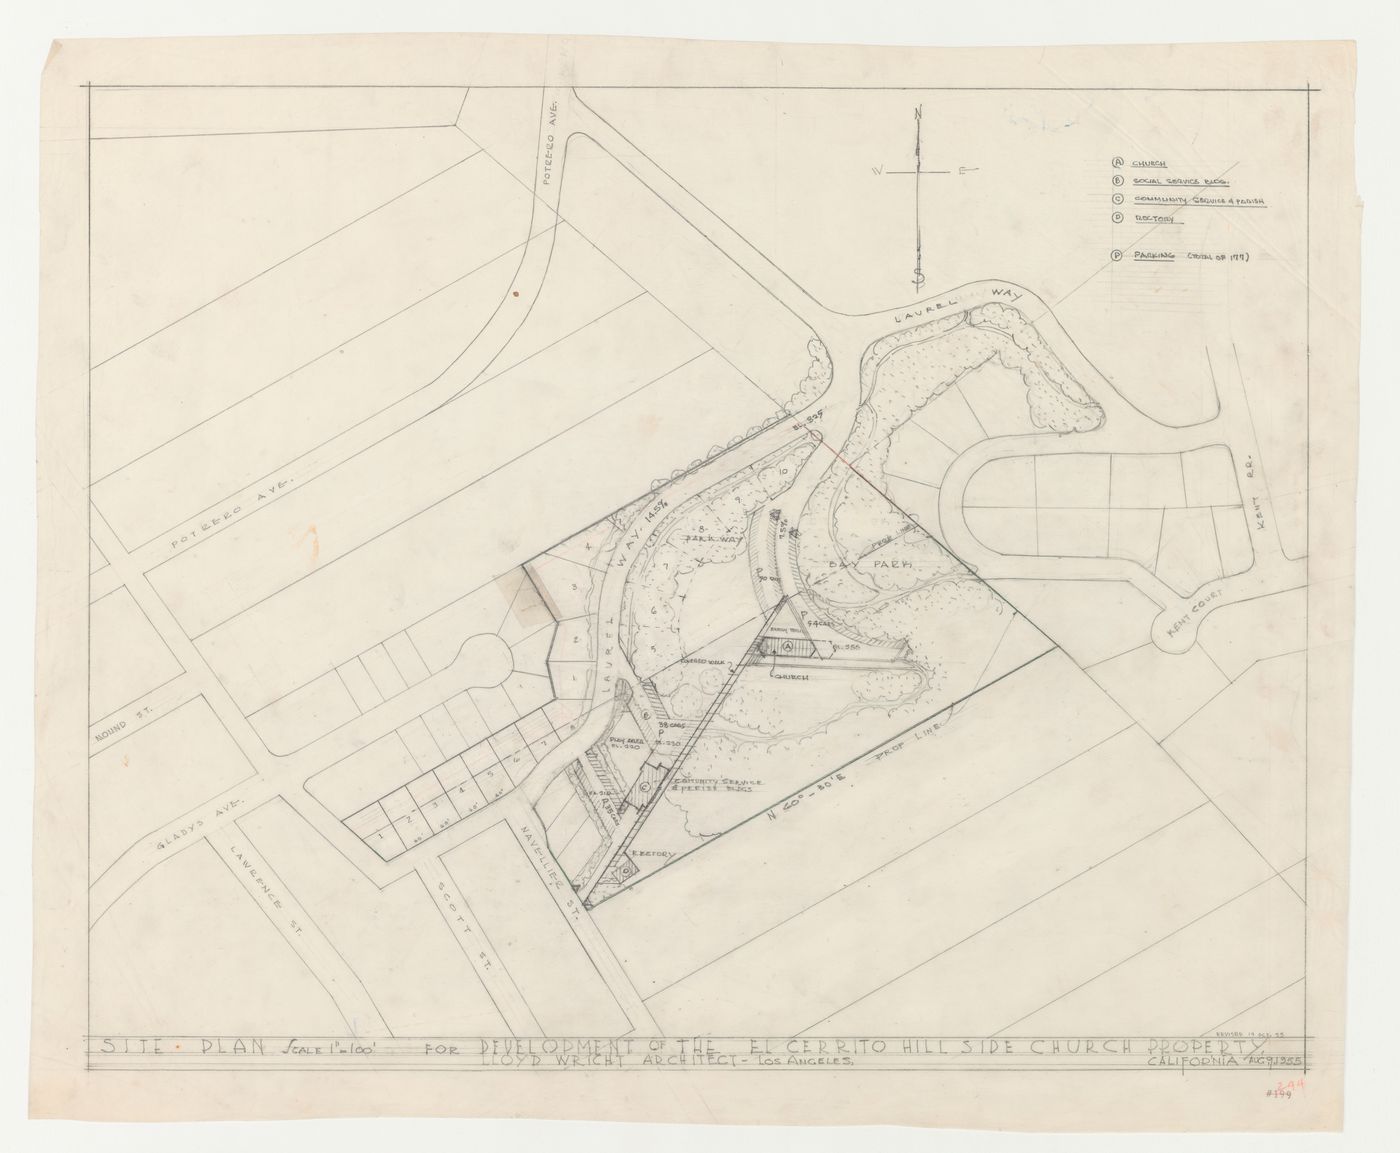 Swedenborg Memorial Chapel, El Cerrito, California: Site plan with adjoining lots